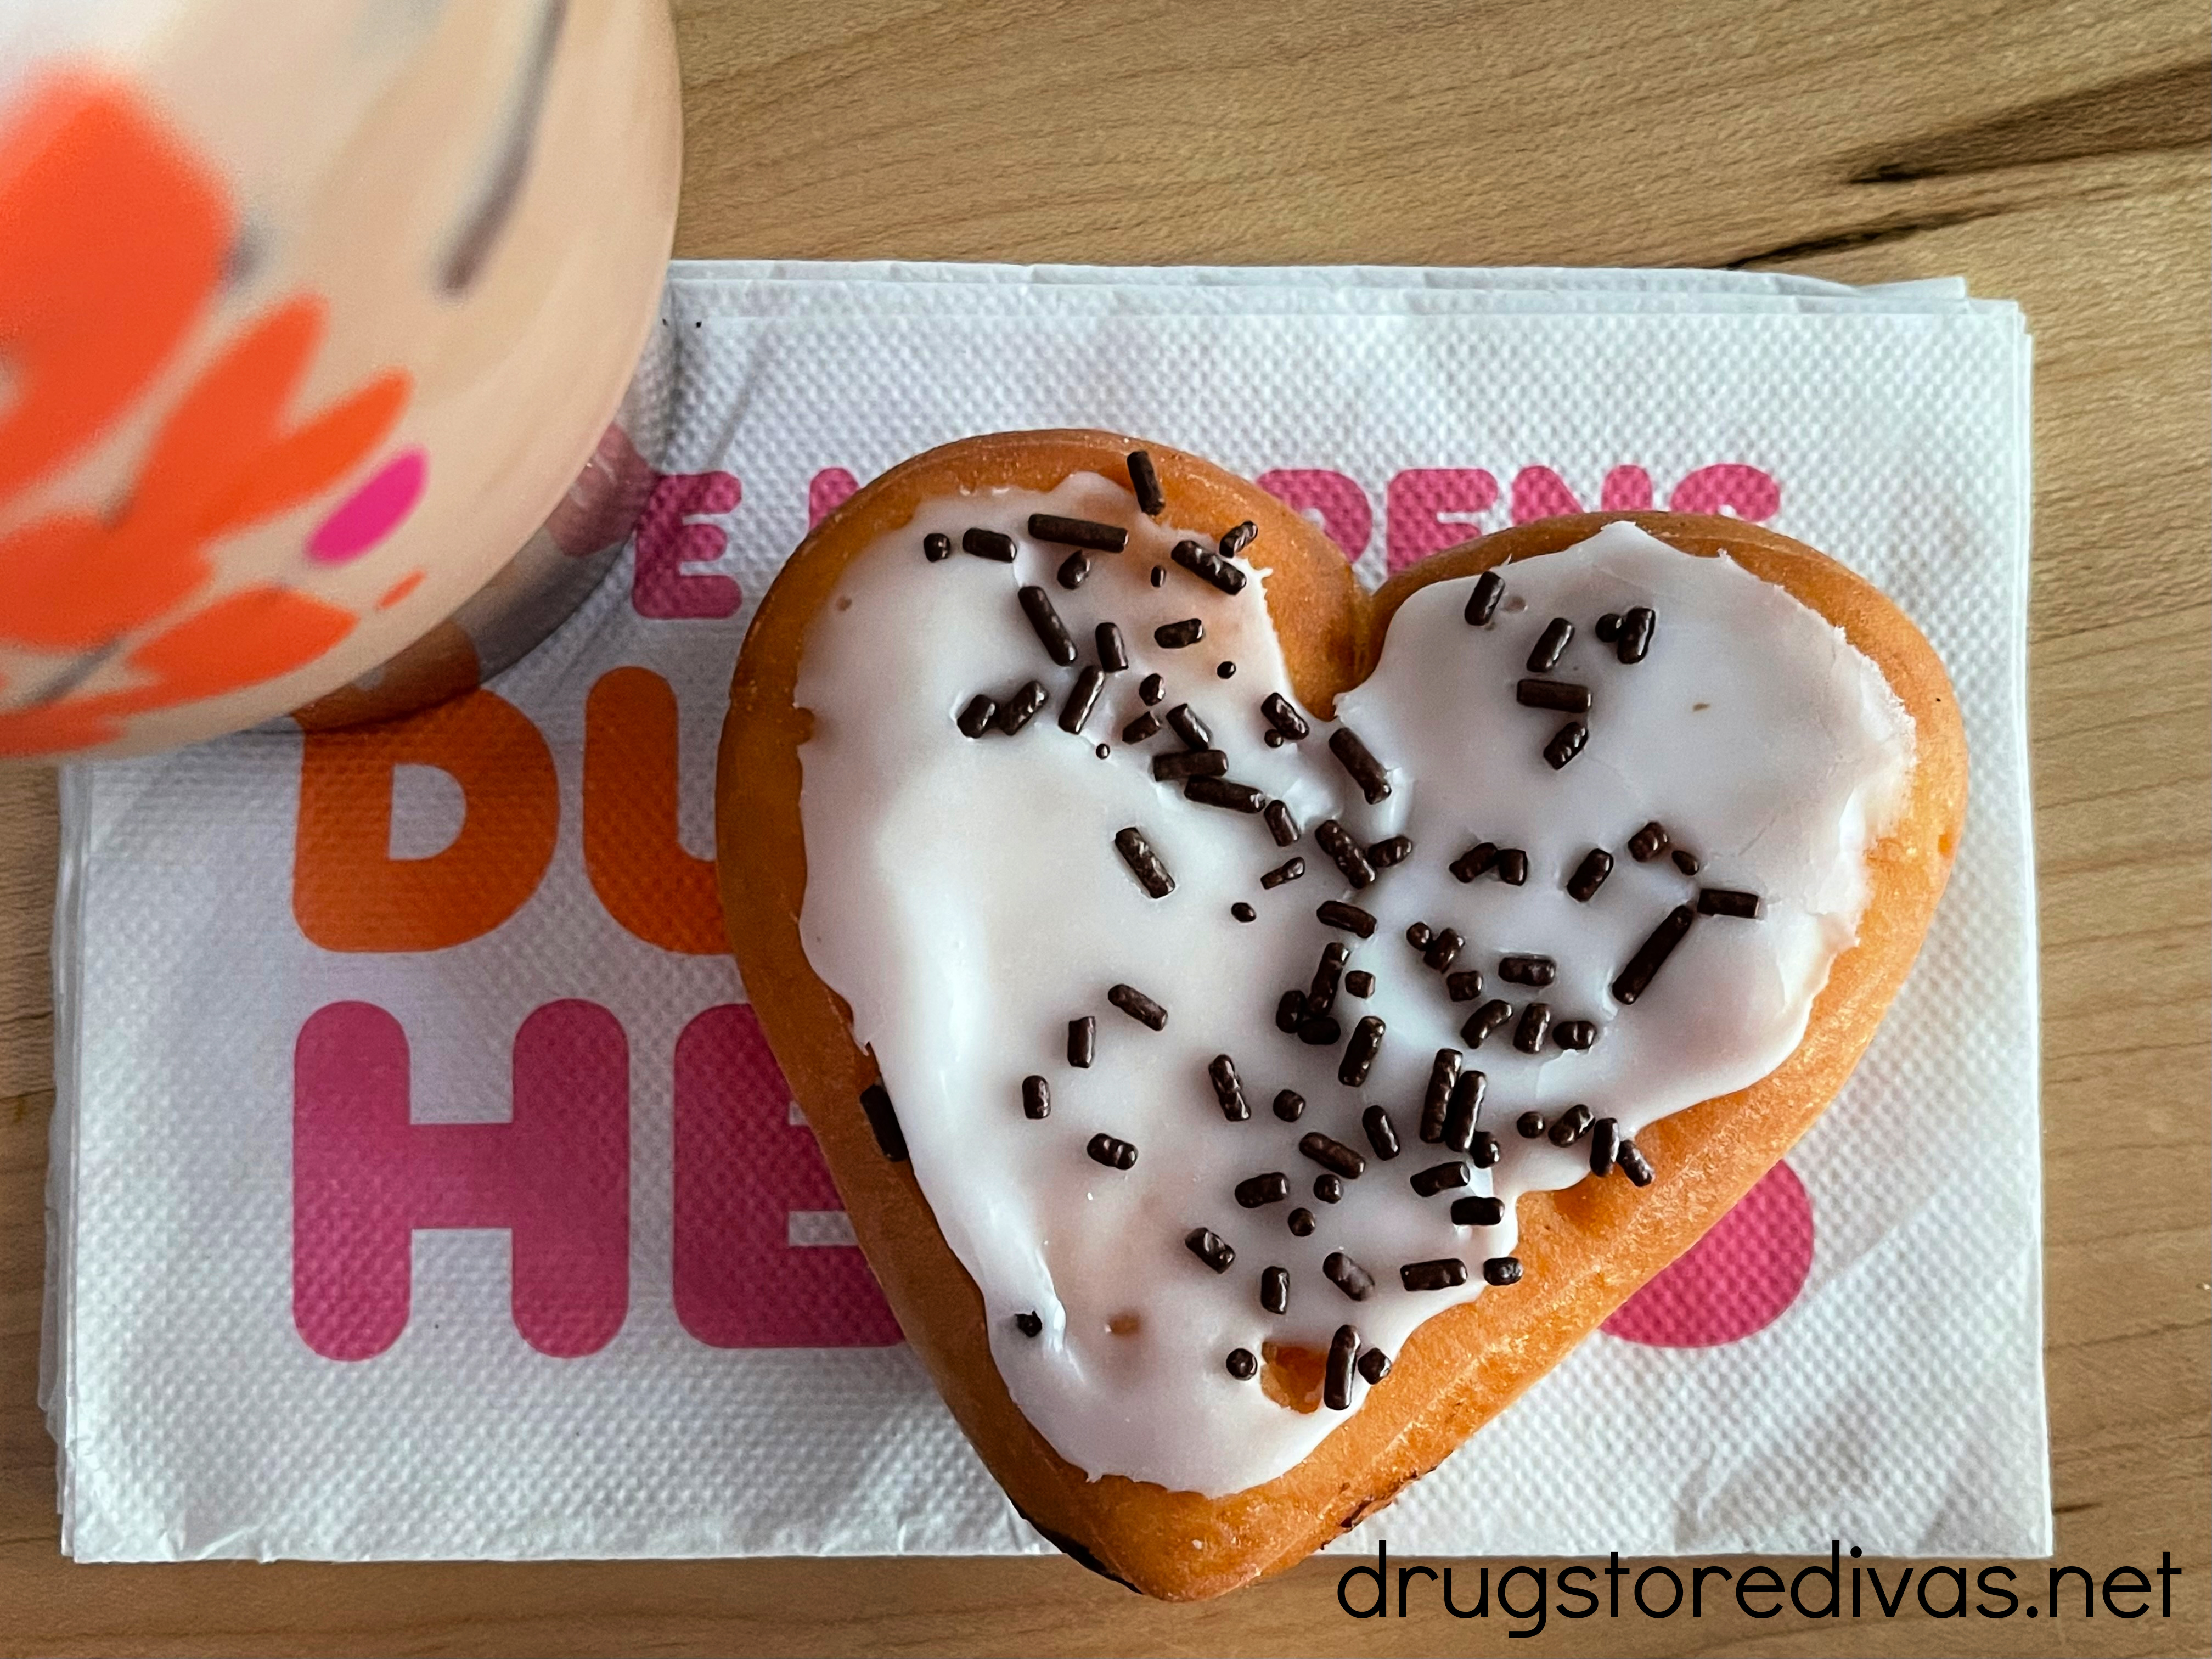 Heart shaped donut and coffee on a napkin.